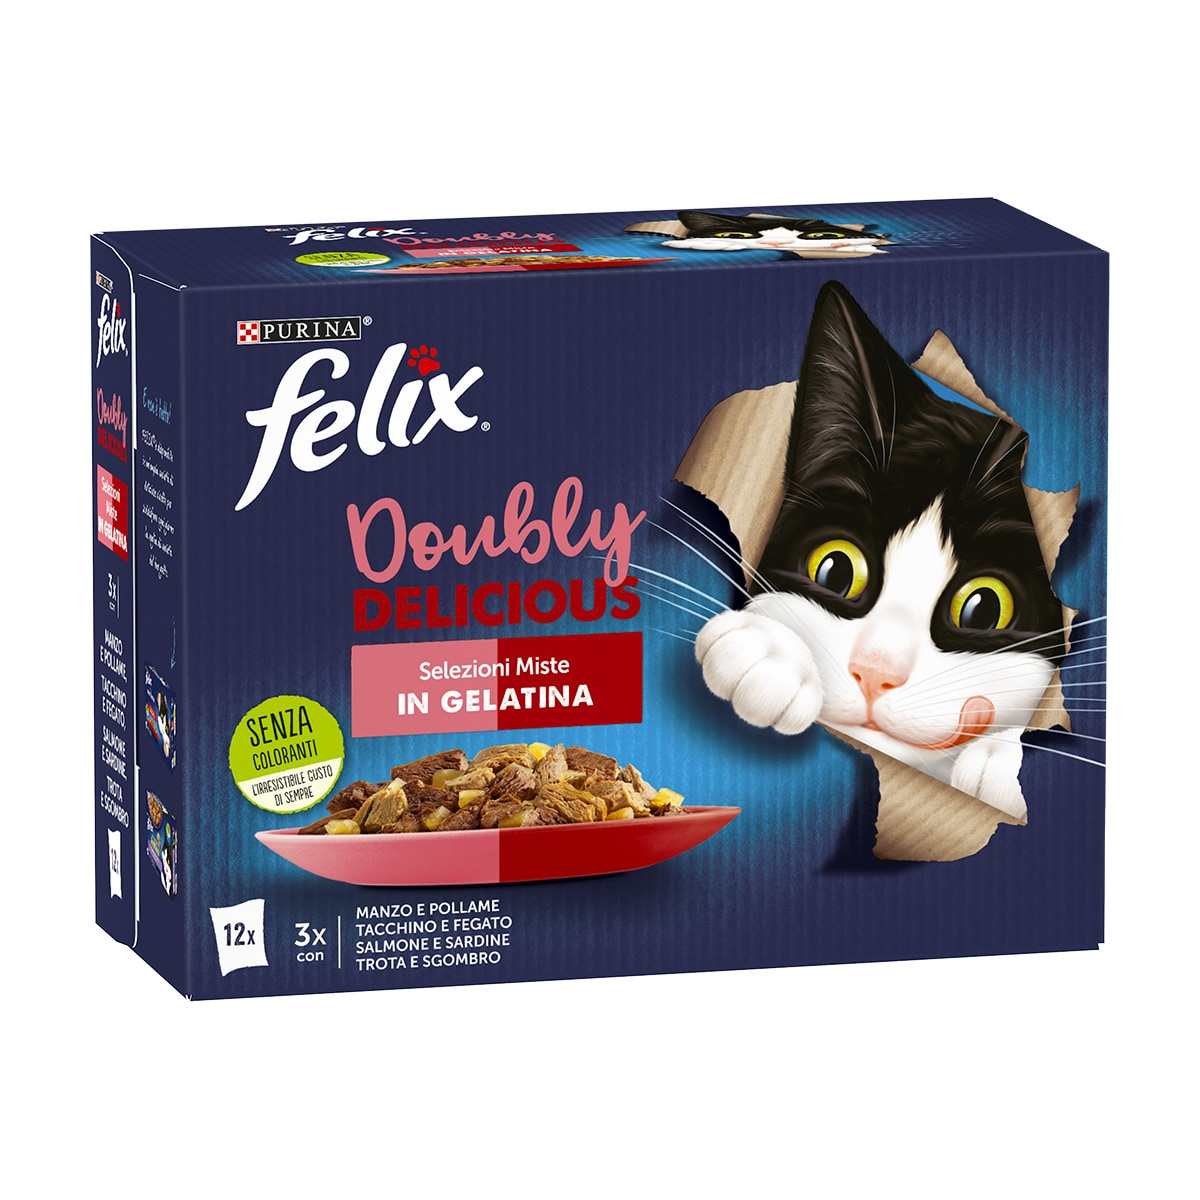 Felix Doubly Delicious Selezioni Miste